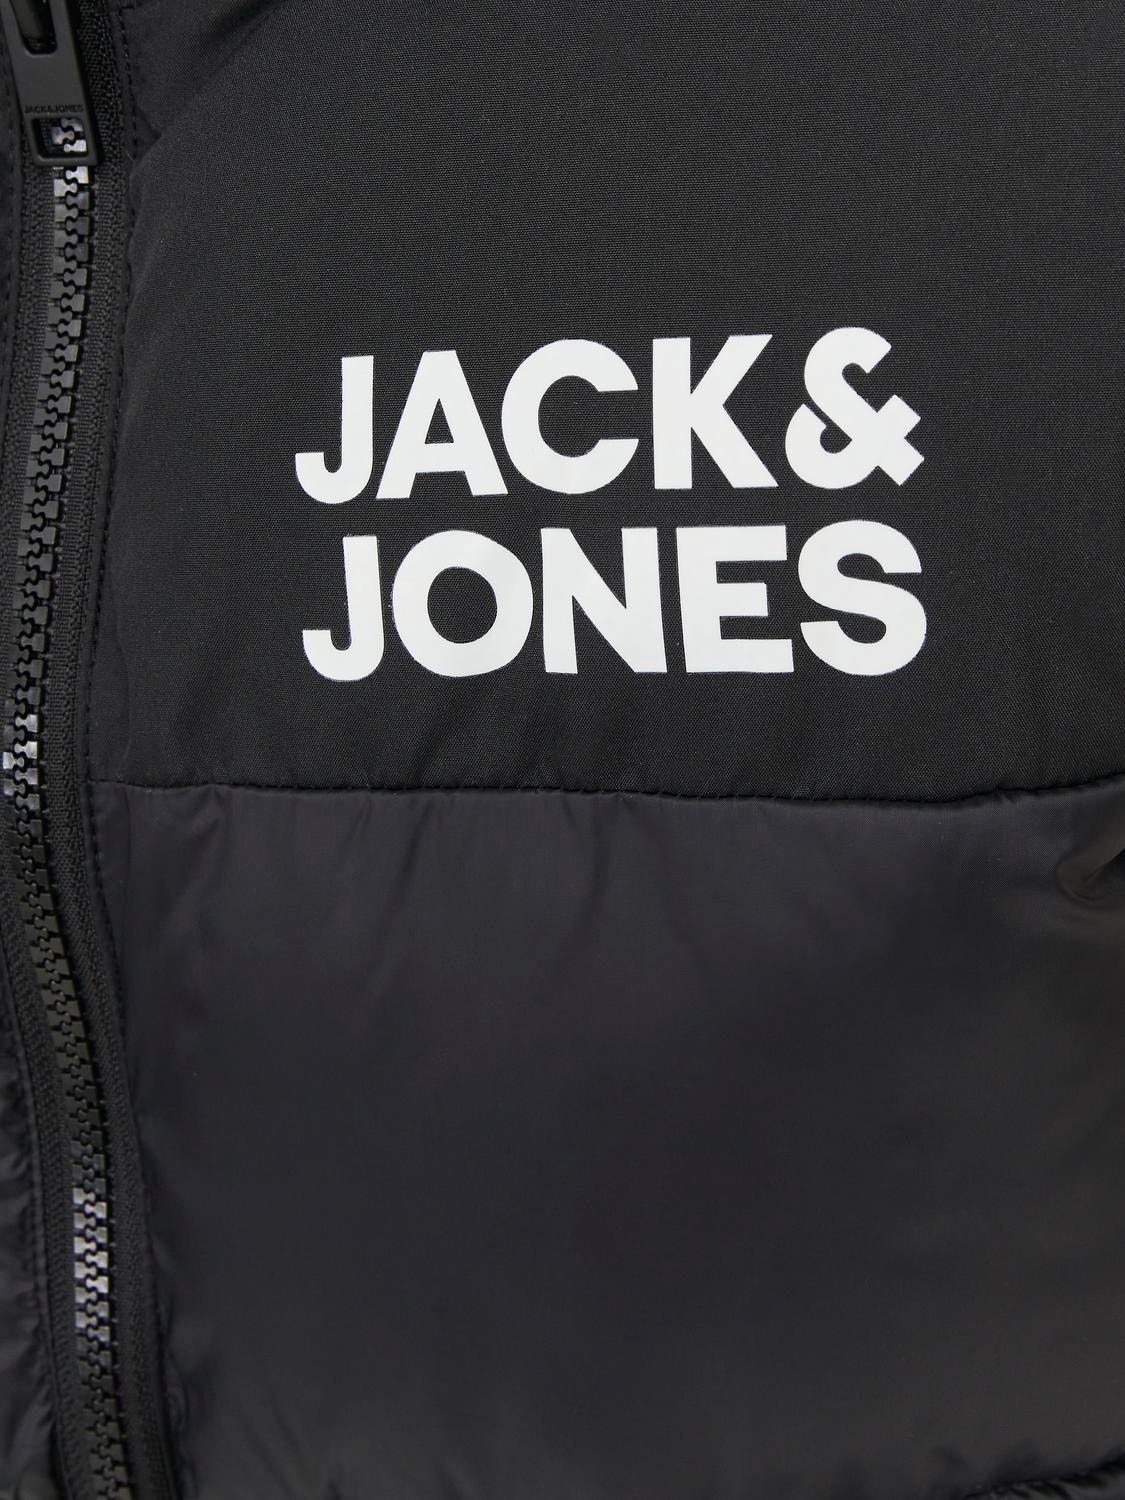 Jack & Jones Poikien Liivi -Black - 12236914